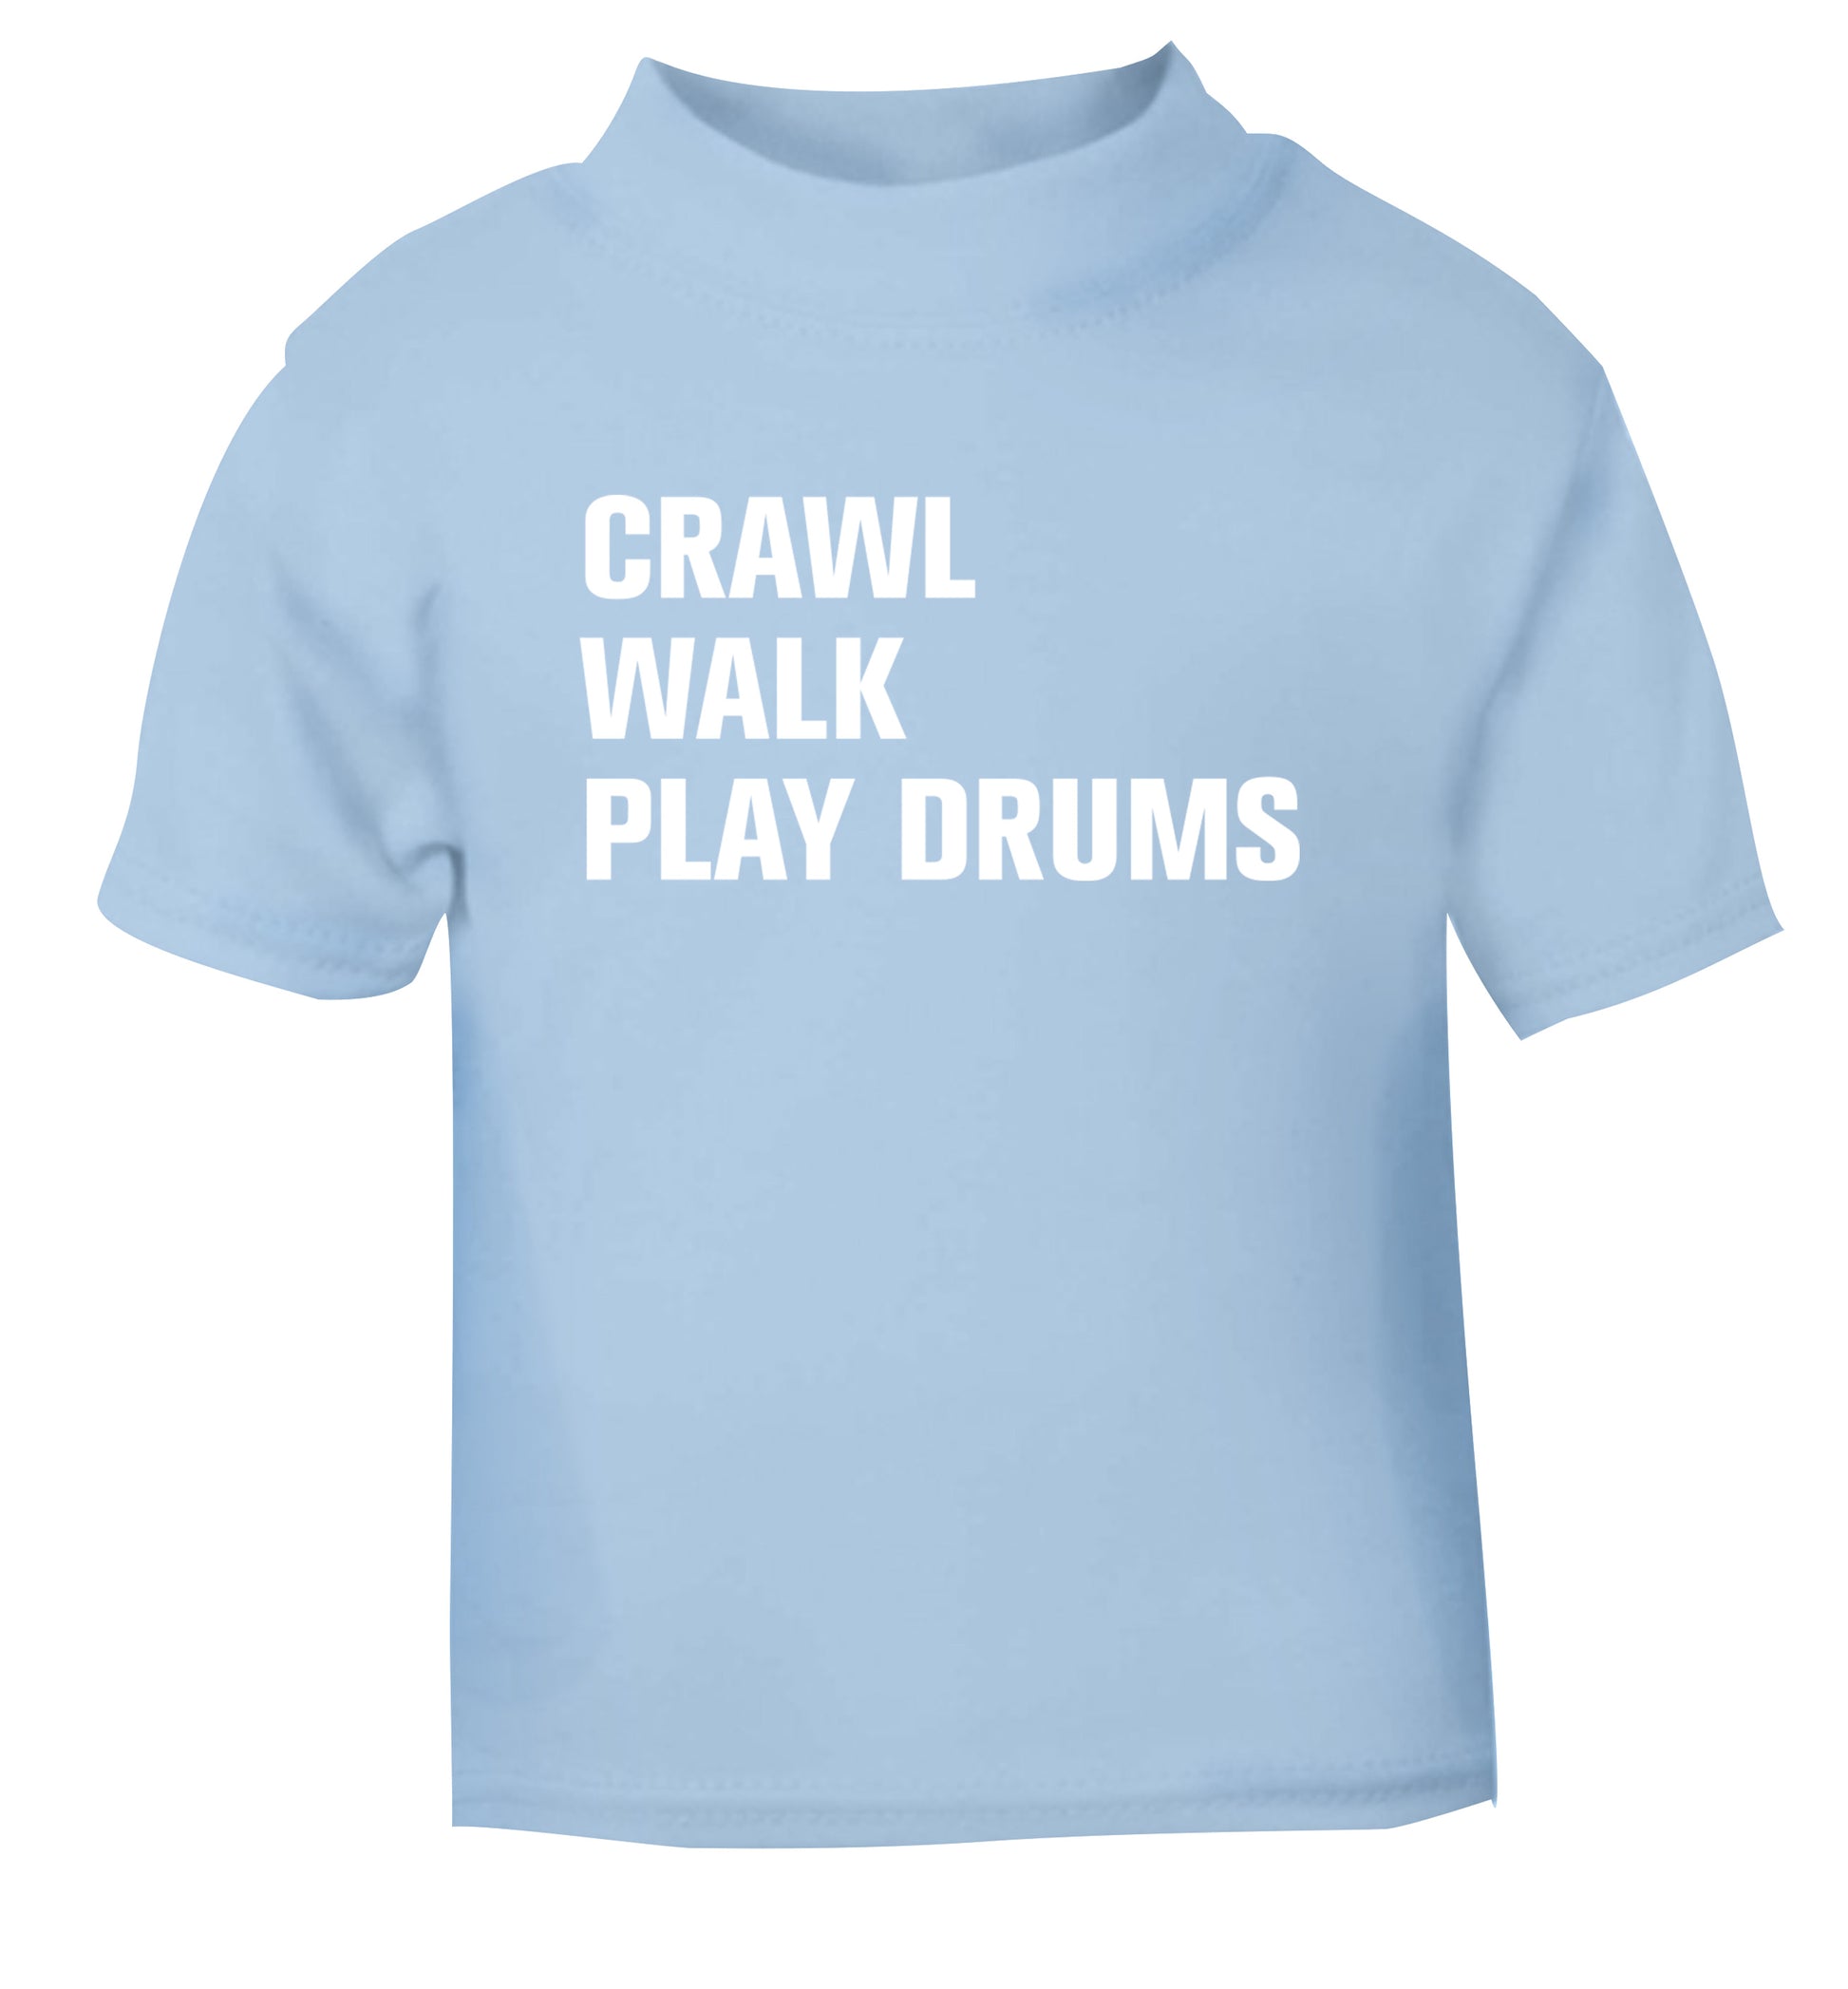 Crawl walk play drums light blue Baby Toddler Tshirt 2 Years